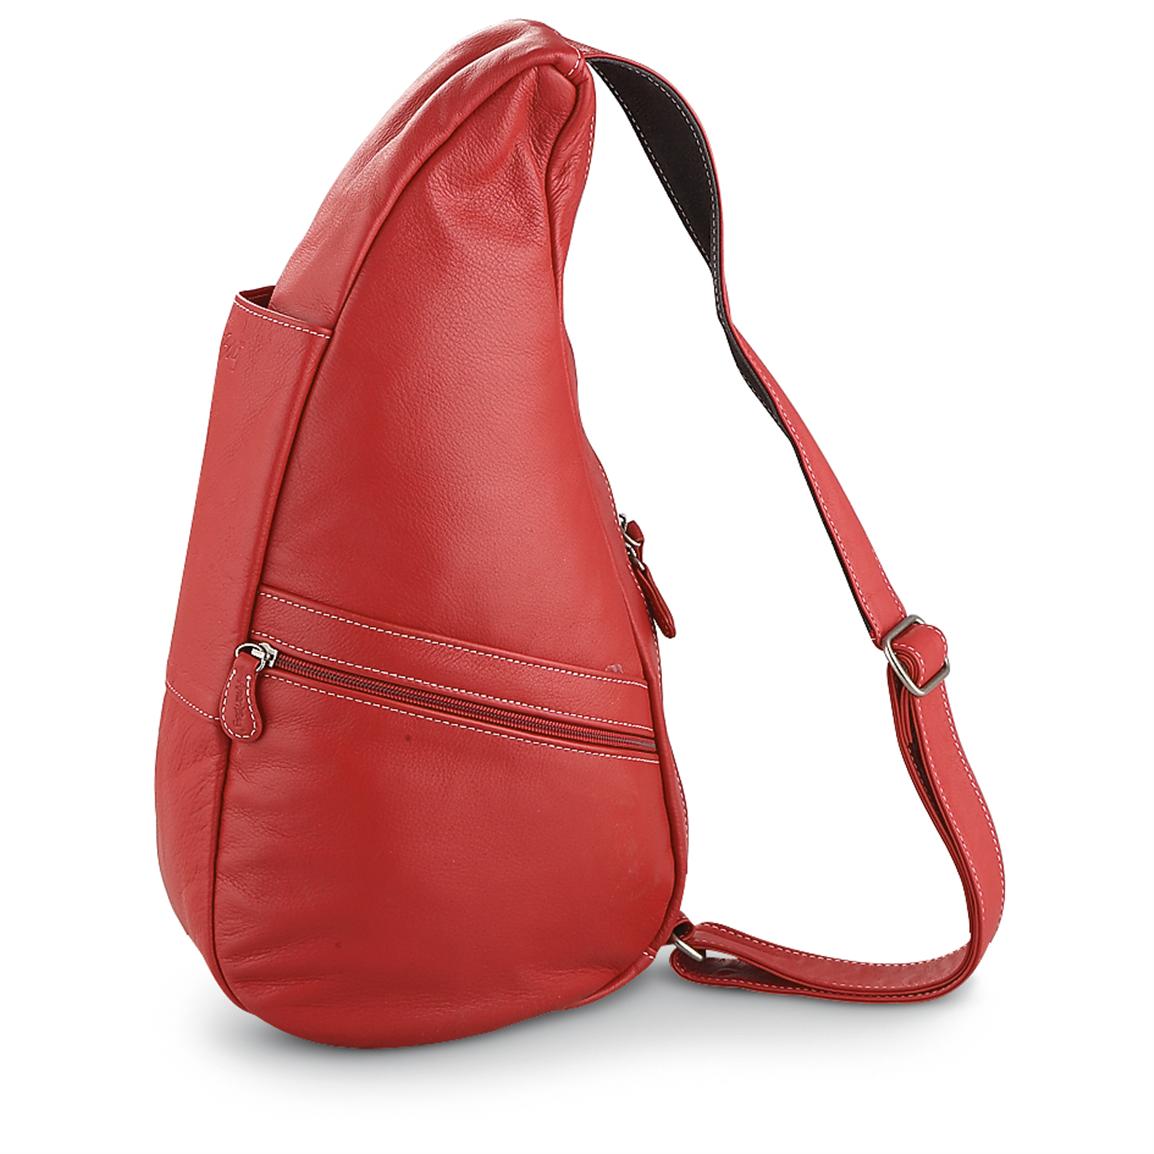 AmeriBag® Leather Healthy Back Bag®, Red - 193714, Purses & Handbags at Sportsman&#39;s Guide